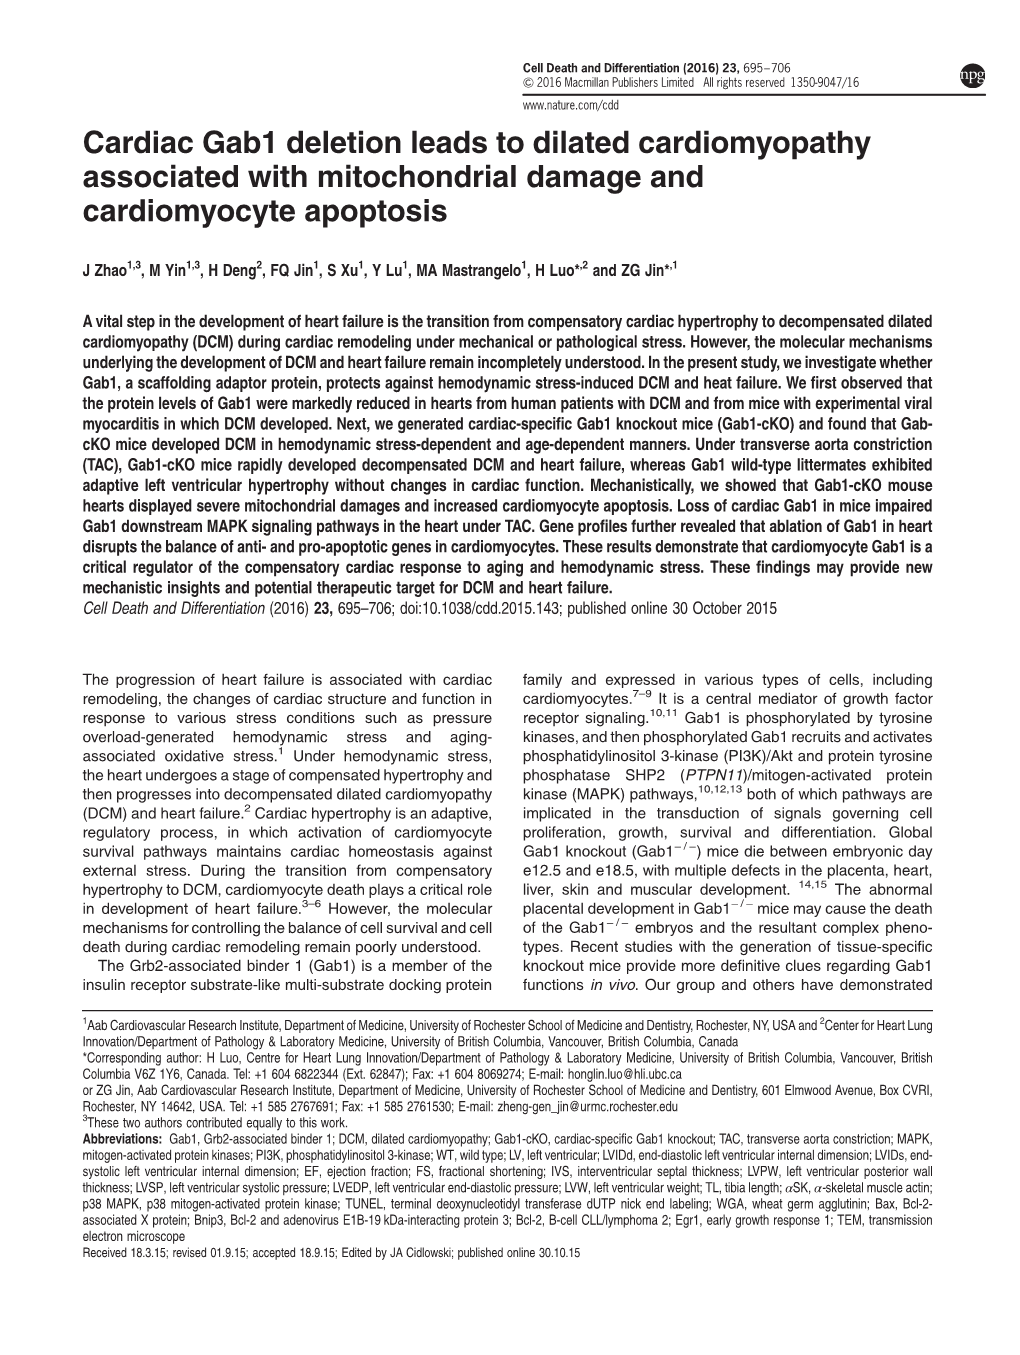 Cardiac Gab1 Deletion Leads to Dilated Cardiomyopathy Associated with Mitochondrial Damage and Cardiomyocyte Apoptosis